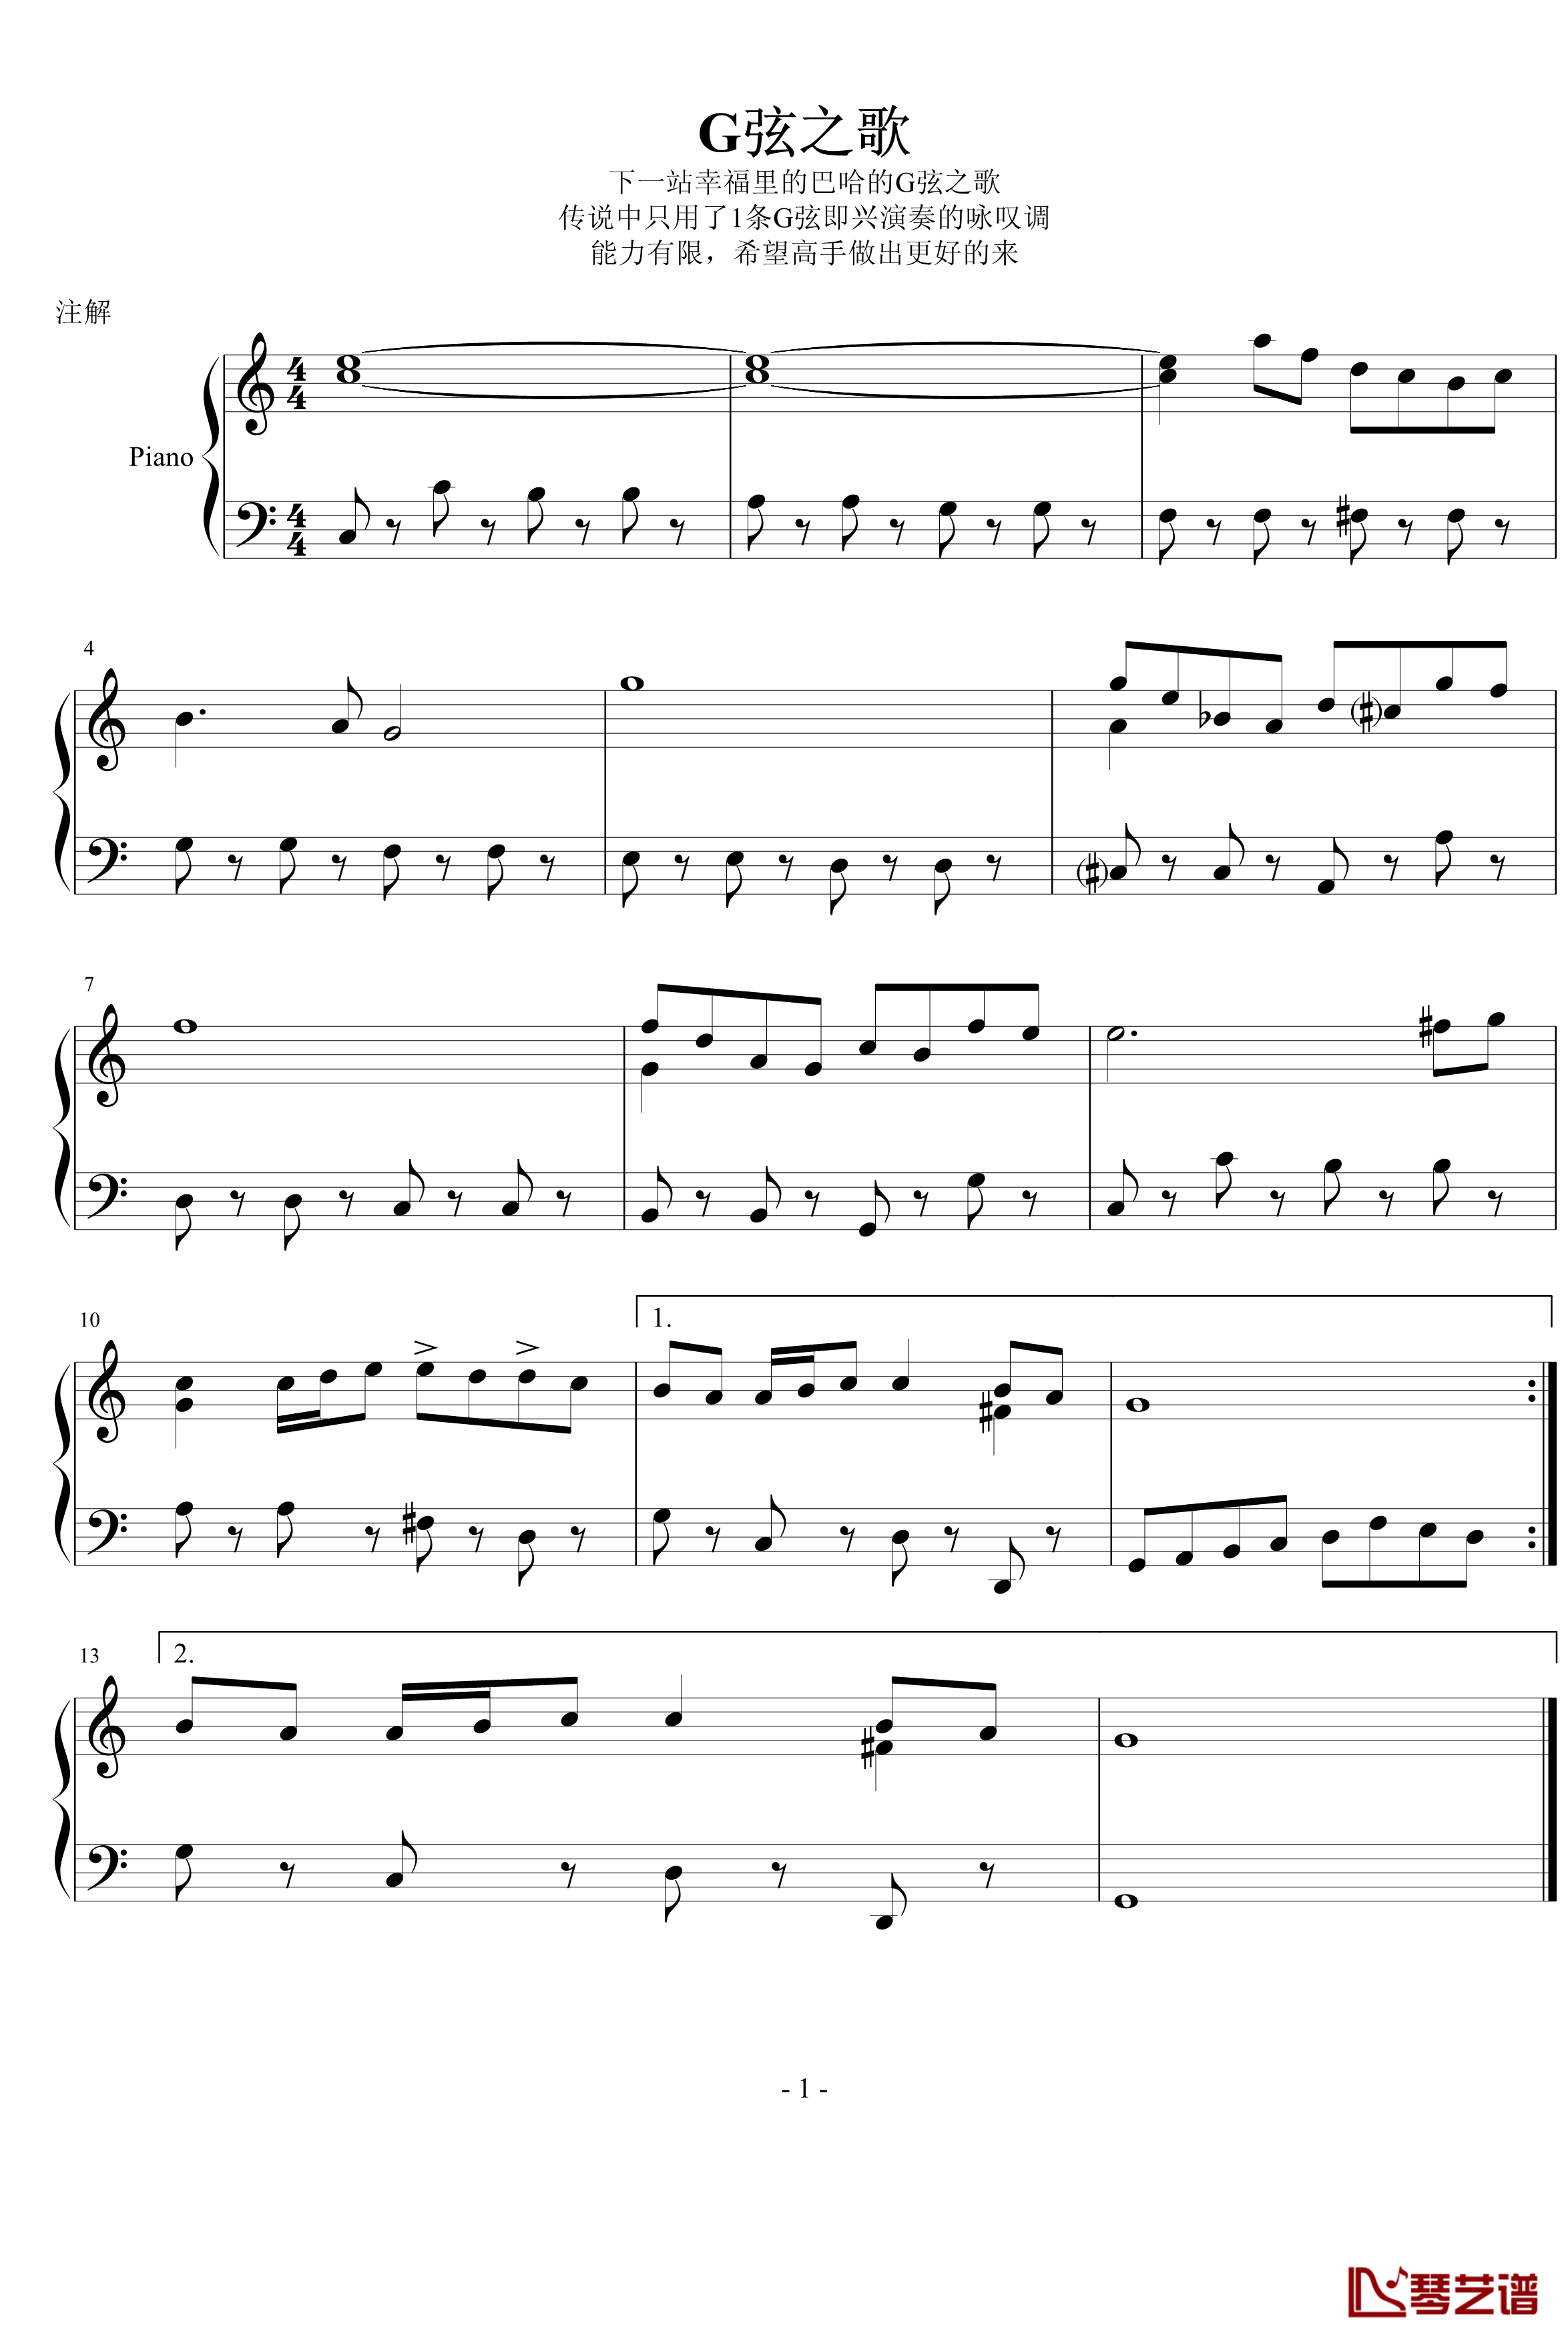 G弦之歌钢琴谱-简单版-巴赫-P.E.Bach1